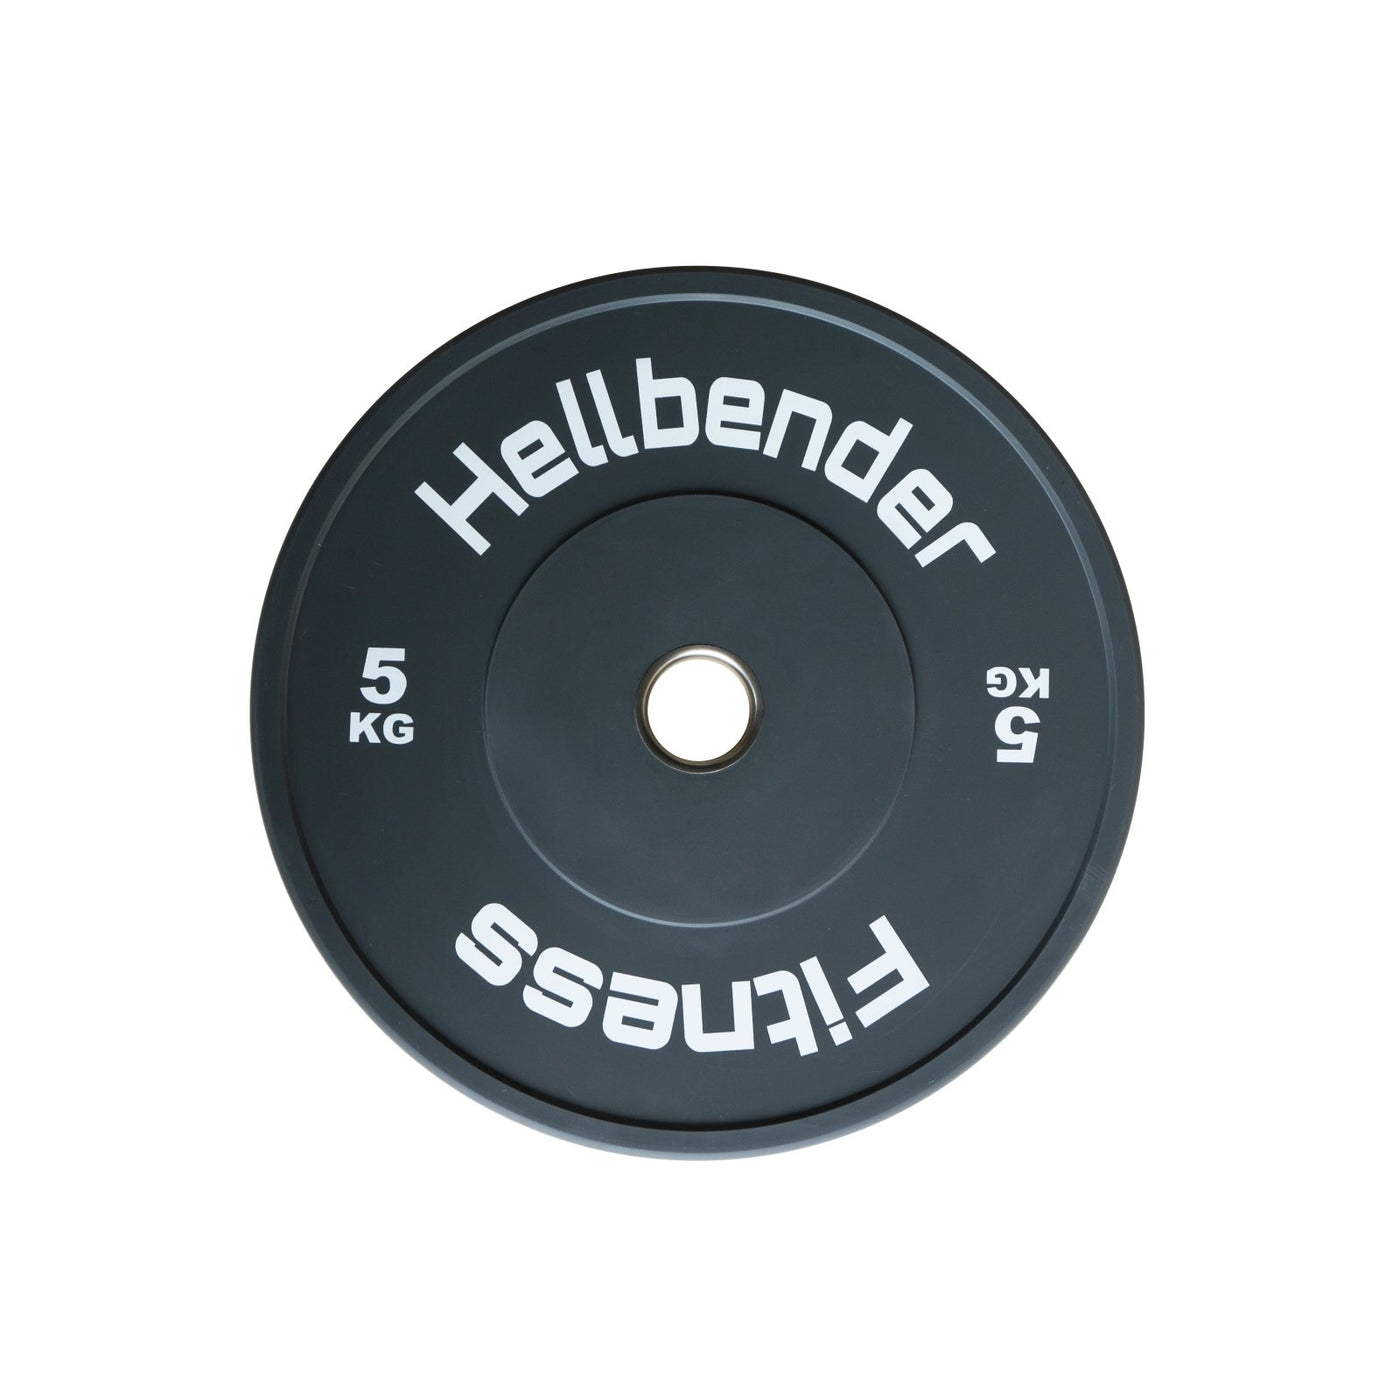 Bumper plate 5 kg - Vægtskive 5 kilo - HellbenderFitness